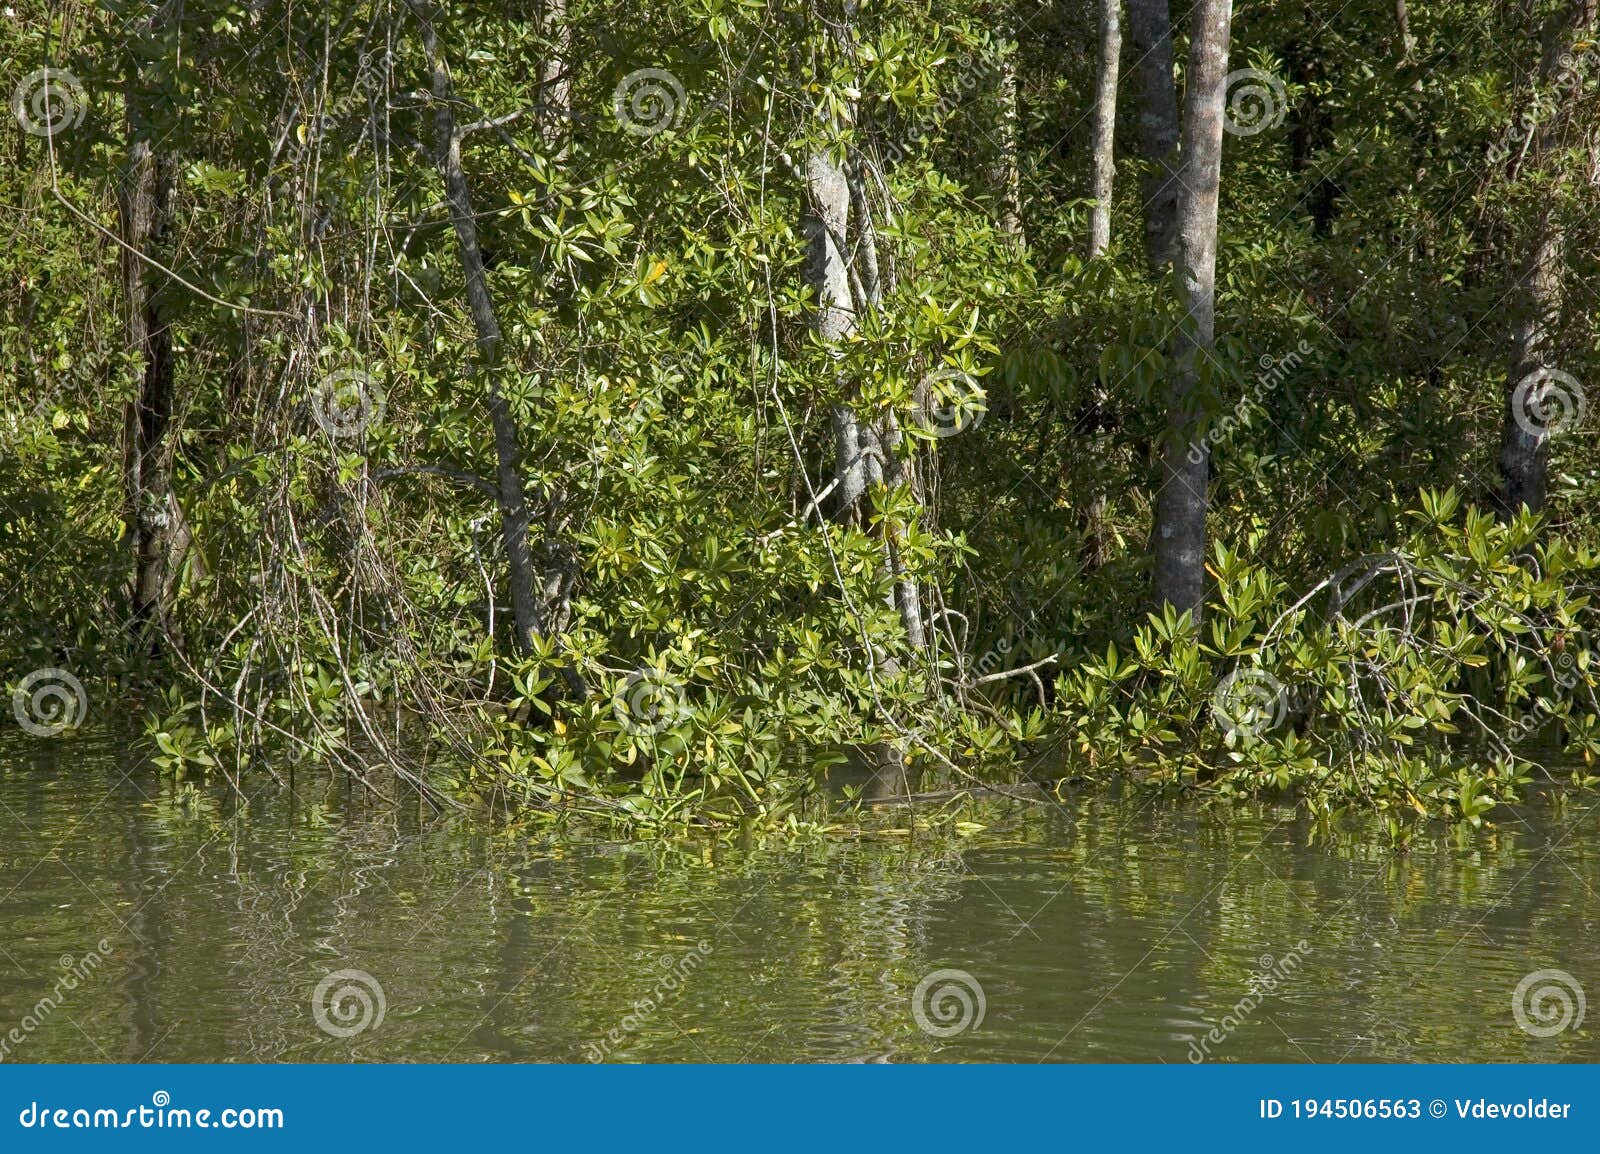 mangroves near sierpe in costa rica